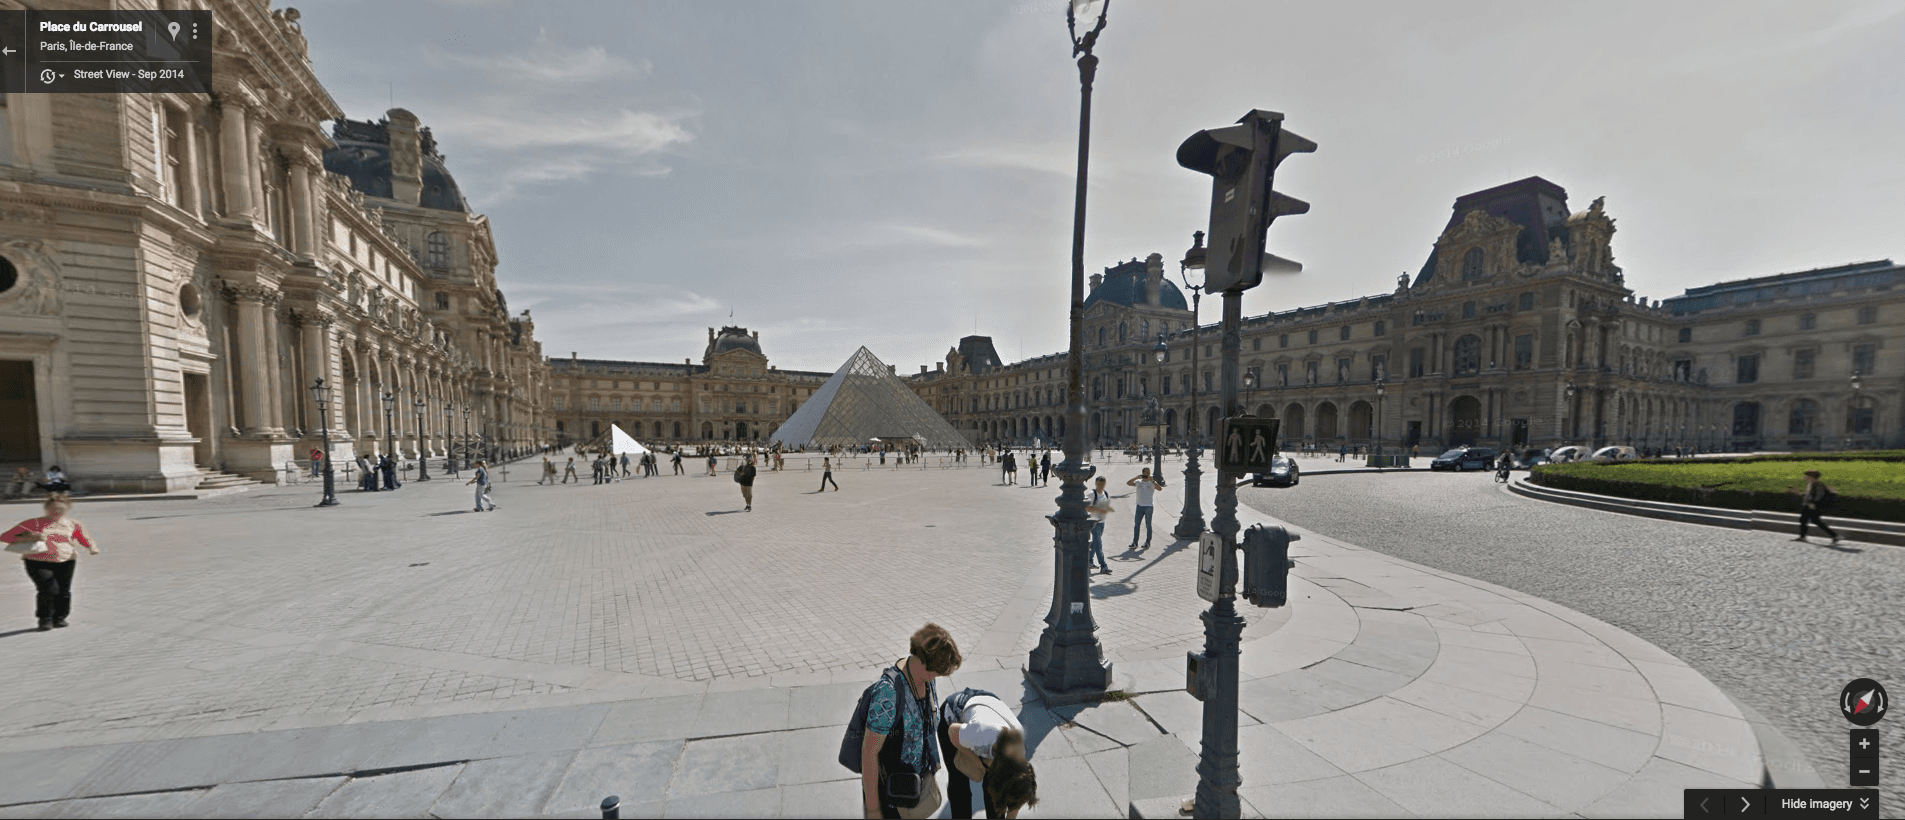 Google Street View of Louvre Museum, Paris, France